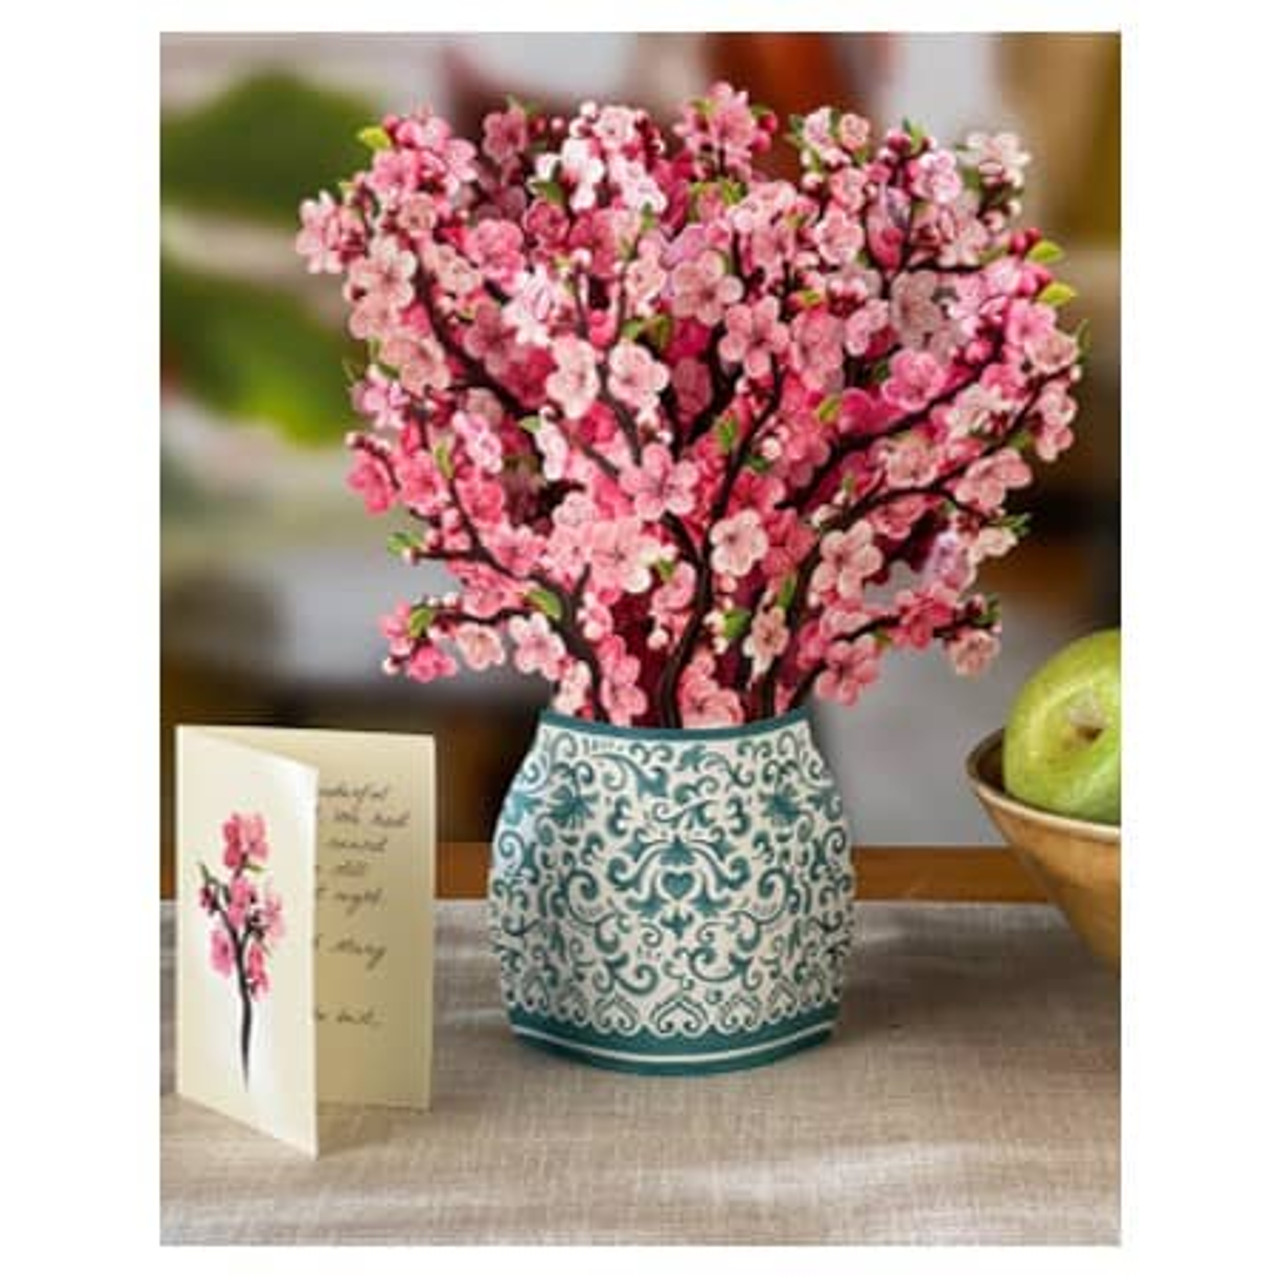 Pop-Up Flower Bouquet - FreshCut Paper